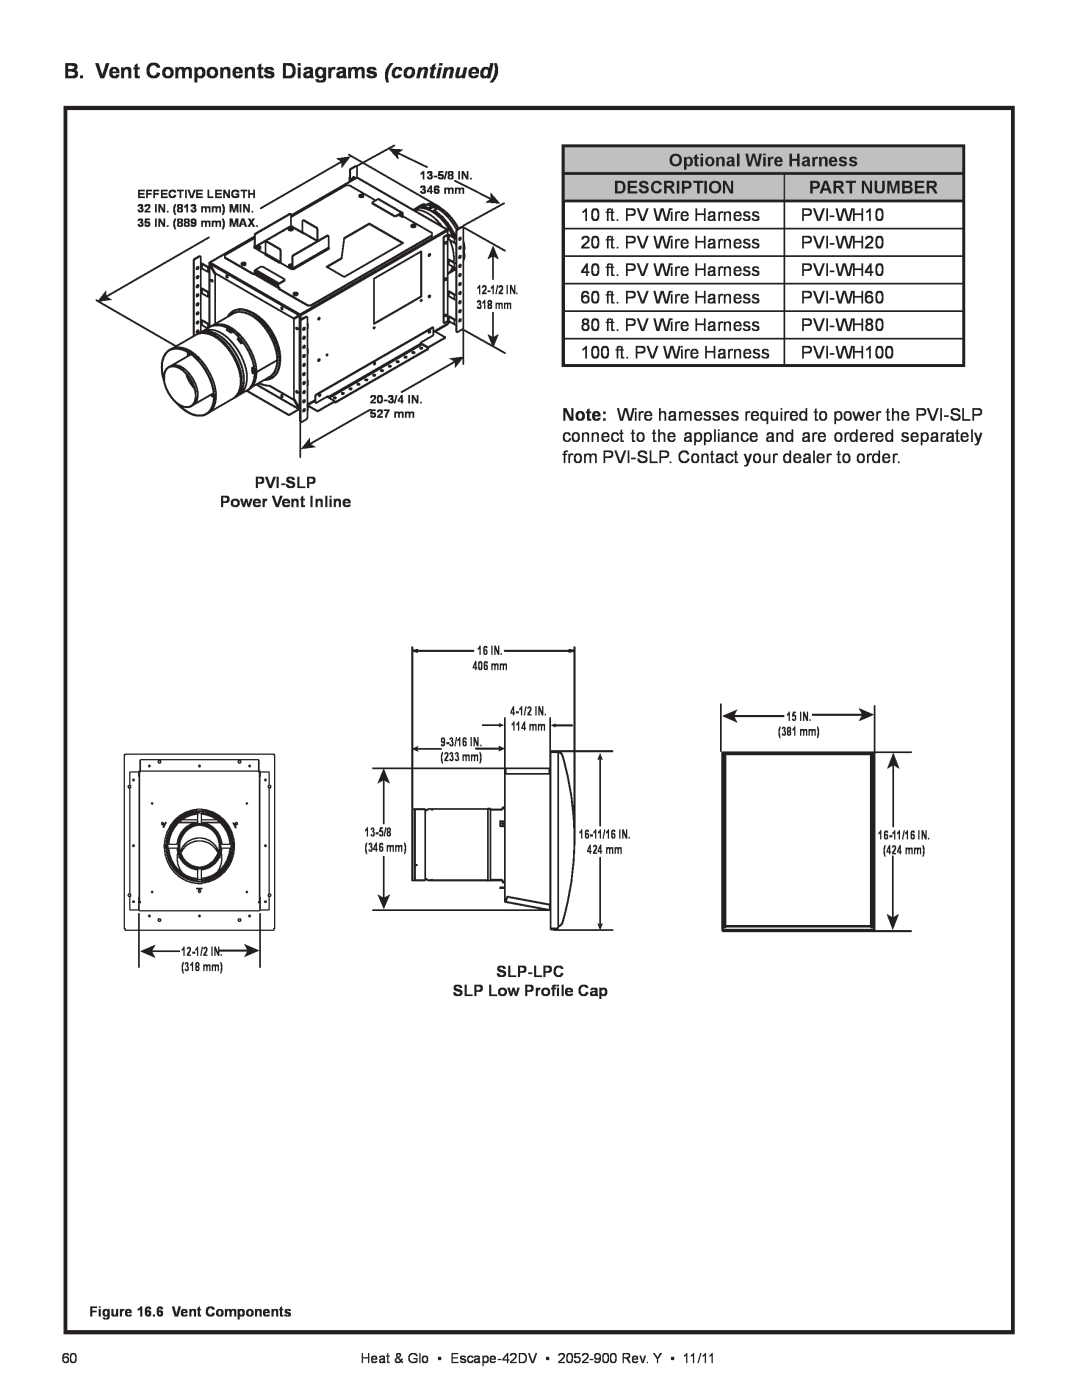 Heat & Glo LifeStyle Escape-42DV B. Vent Components Diagrams continued, Optional Wire Harness, Description, Part Number 